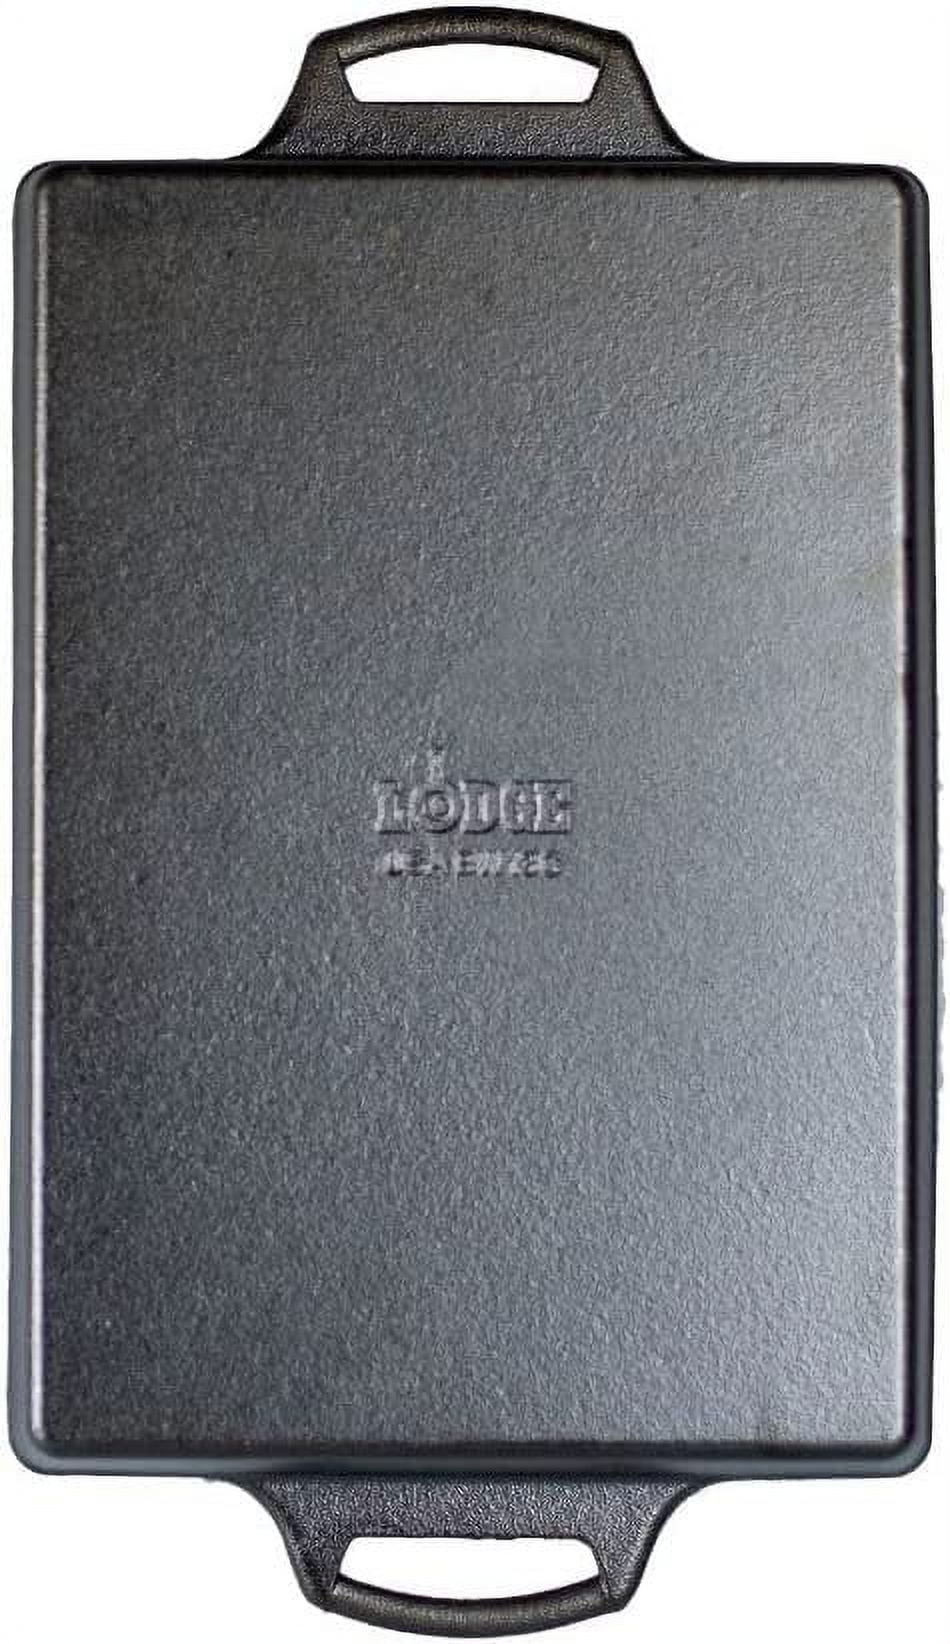 Lodge BW13C 9 x 13 Inch Seasoned Cast Iron Casserole, 9x13 inch, Black 